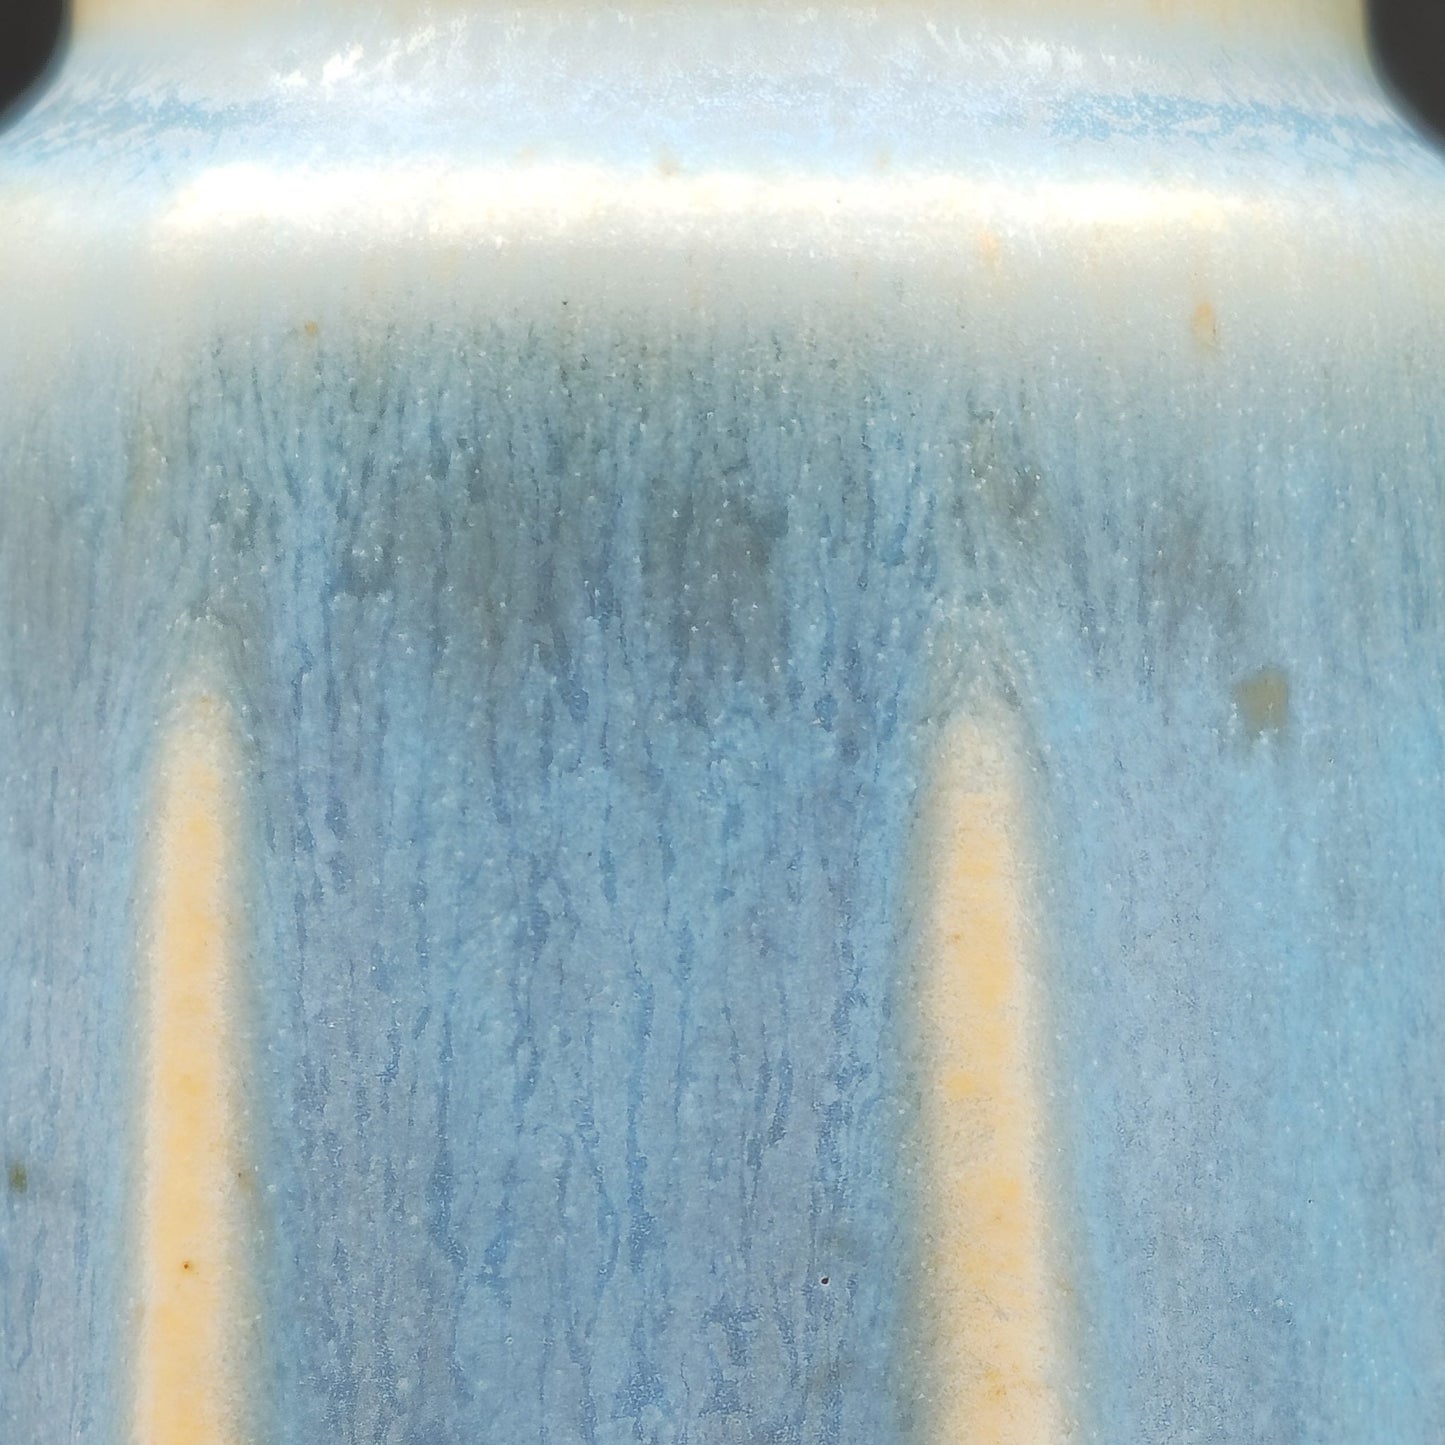 PER LINNEMANN SCHMIDT Palshus Pale Blue Harefur Glazed Stoneware Vase Mollaris.com 